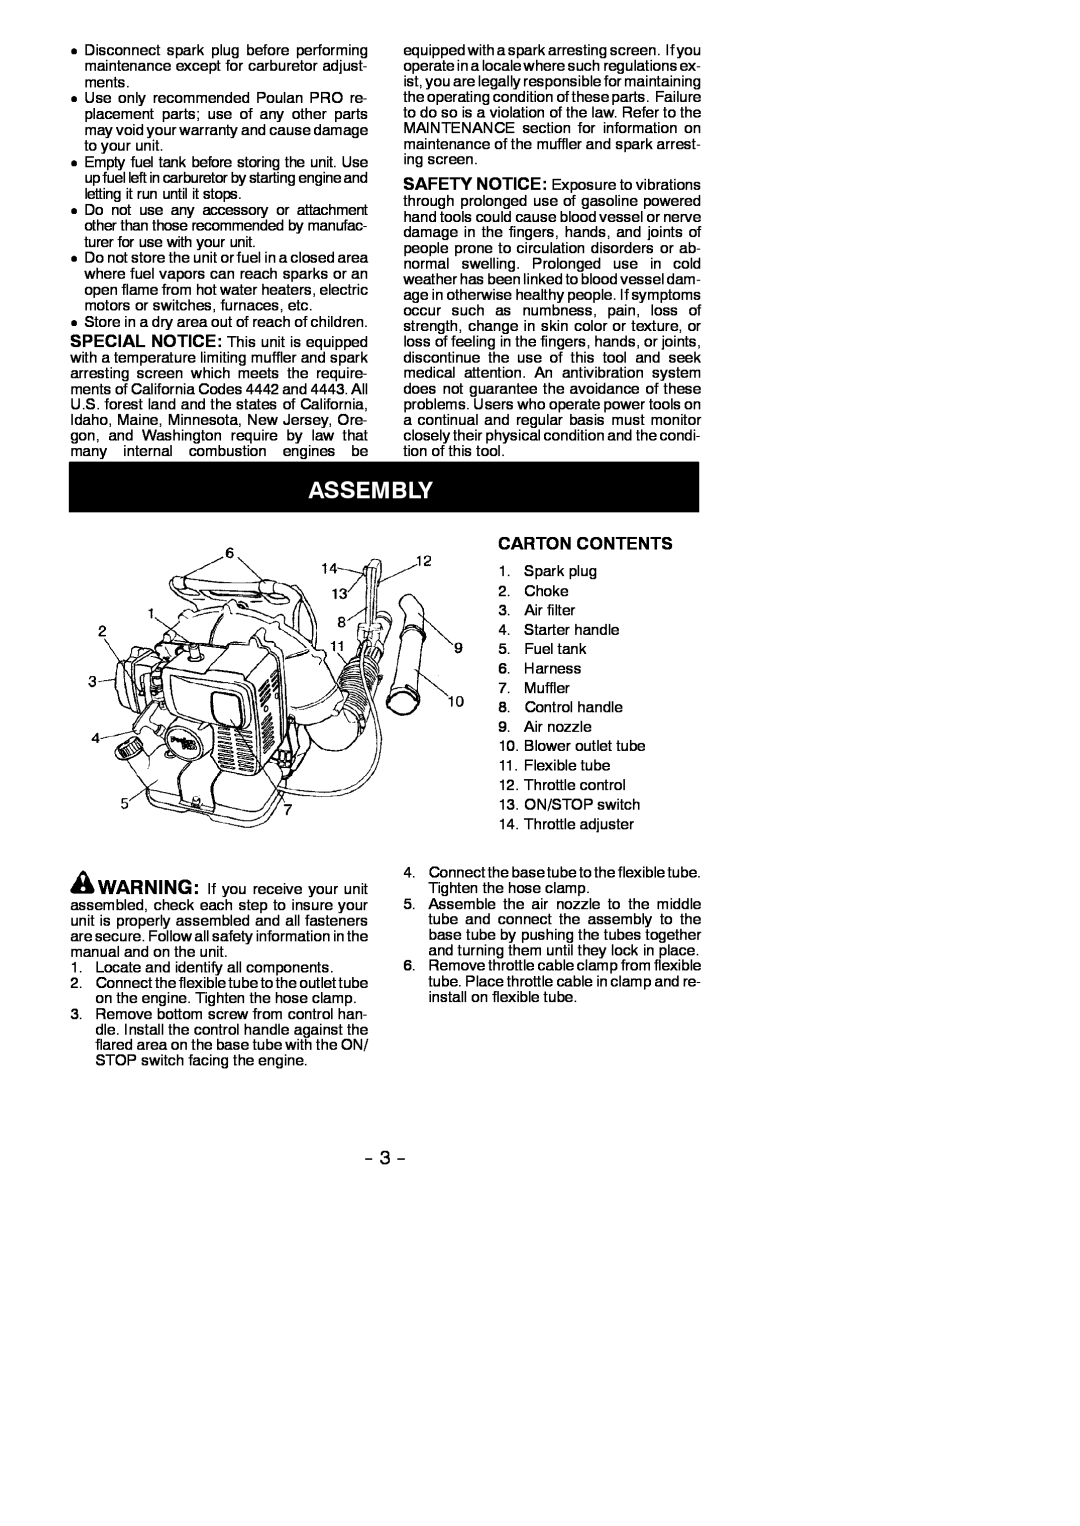 Poulan BP406 instruction manual Assembly, Carton Contents 